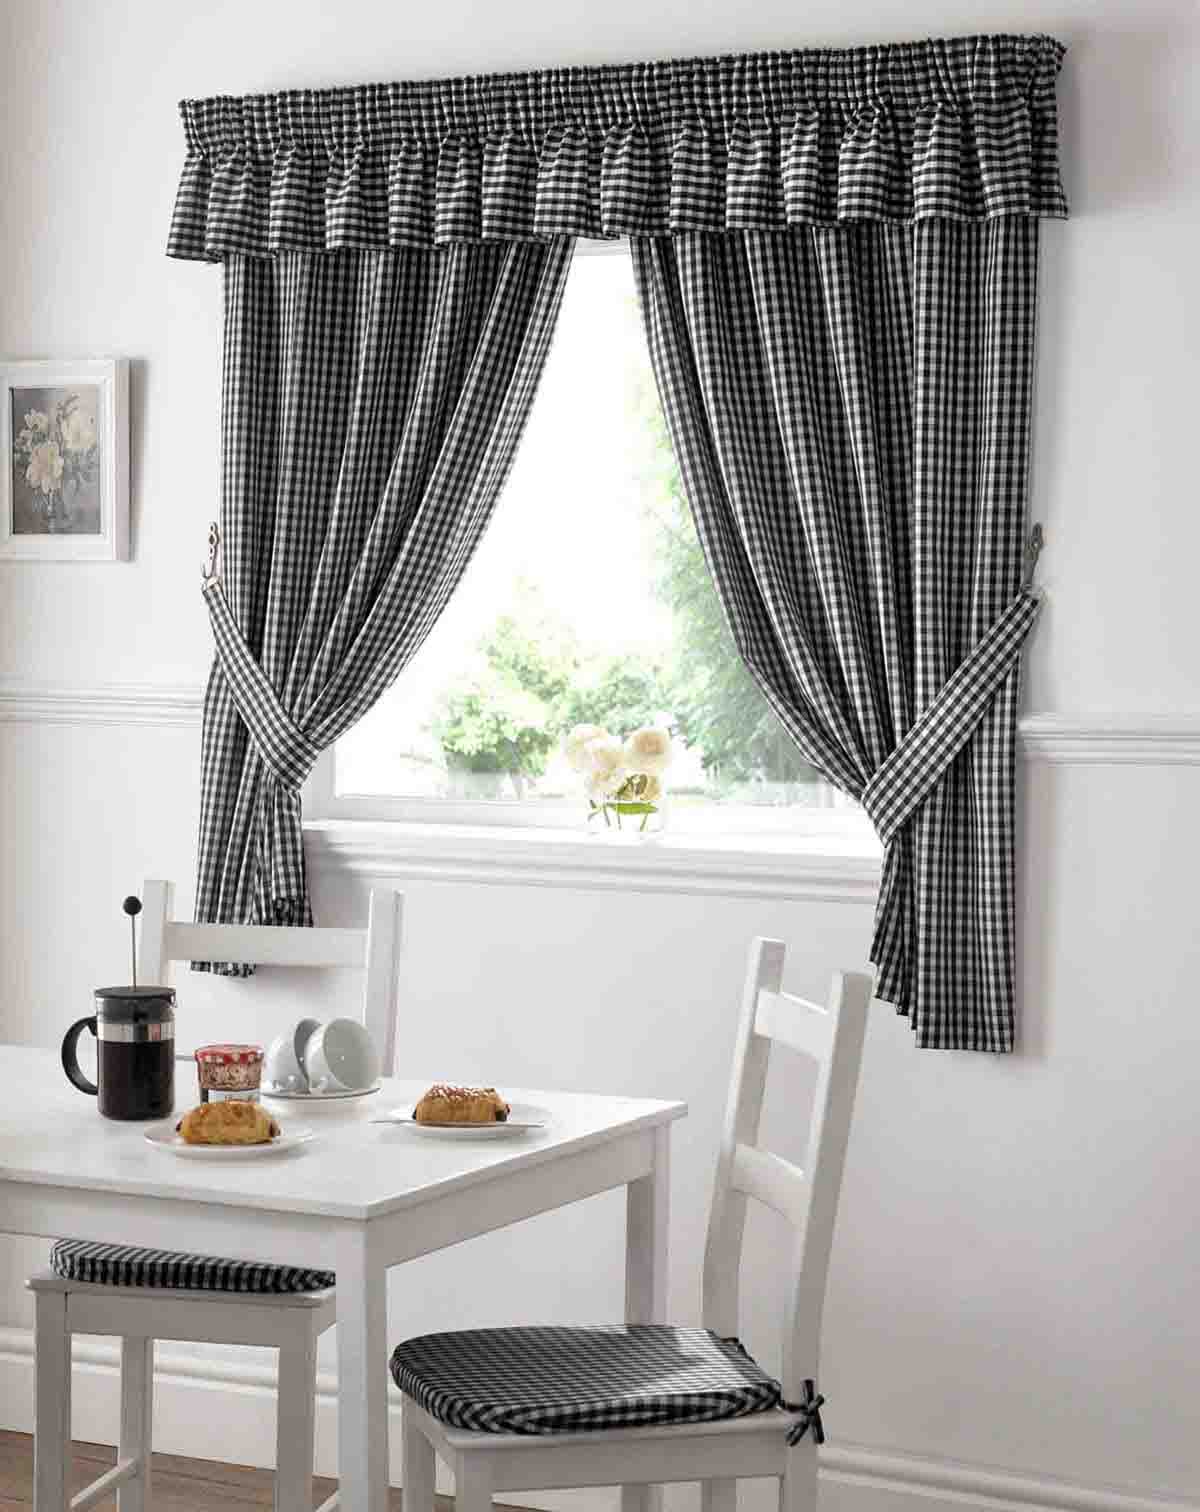 Kitchen Curtain Ideas The Best Window Treatment LivingHours